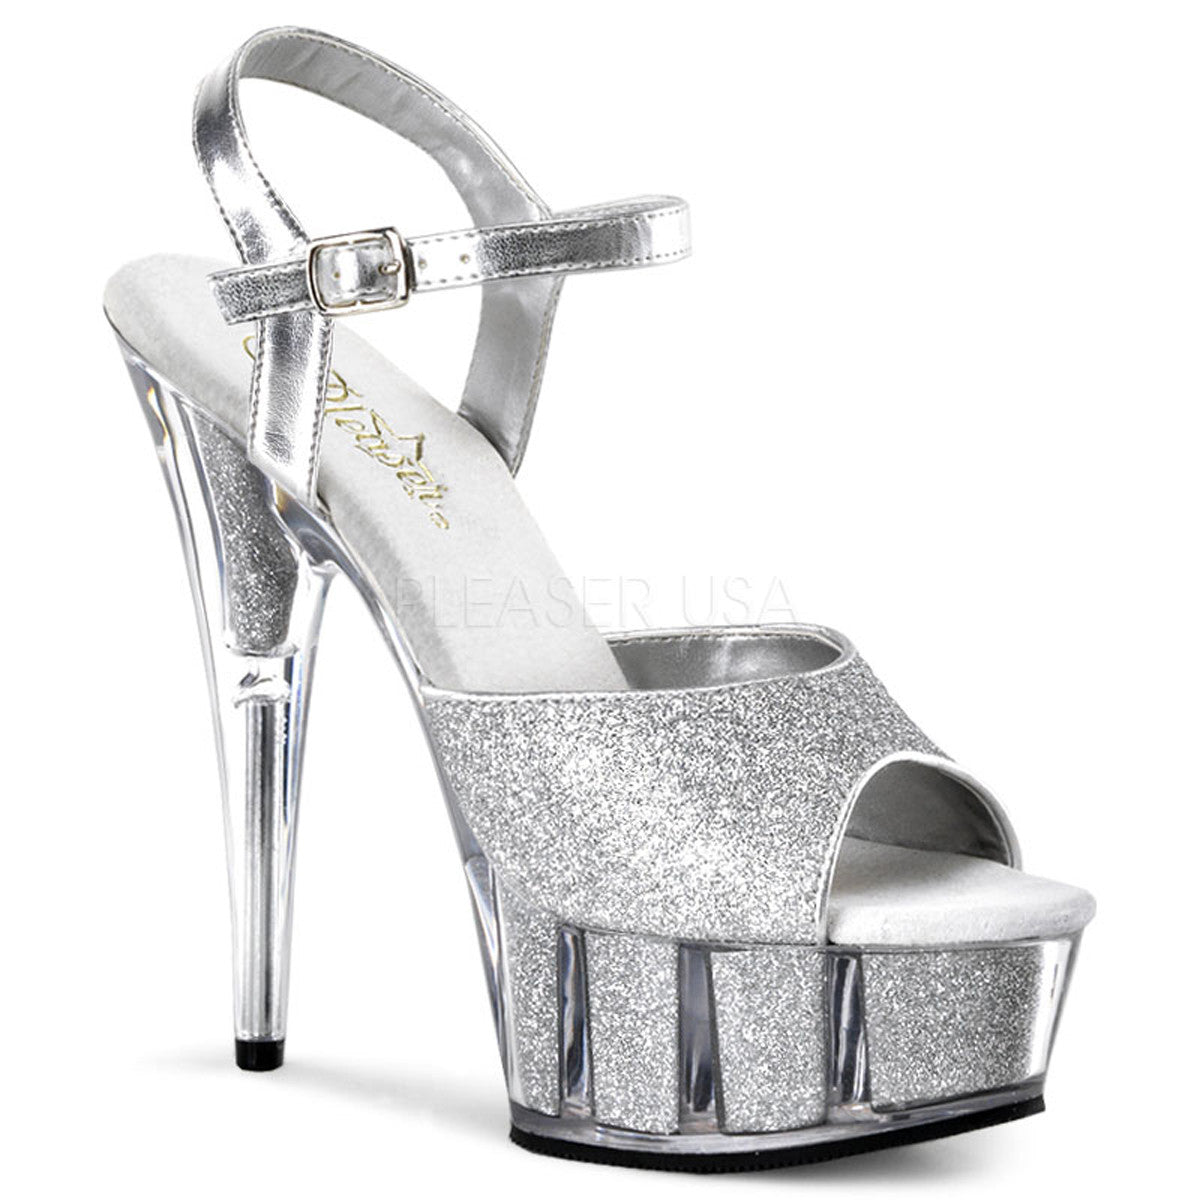 PLEASER DELIGHT-609-5G Silver Glitter-Silver Glitter Ankle Strap Sandals - Shoecup.com